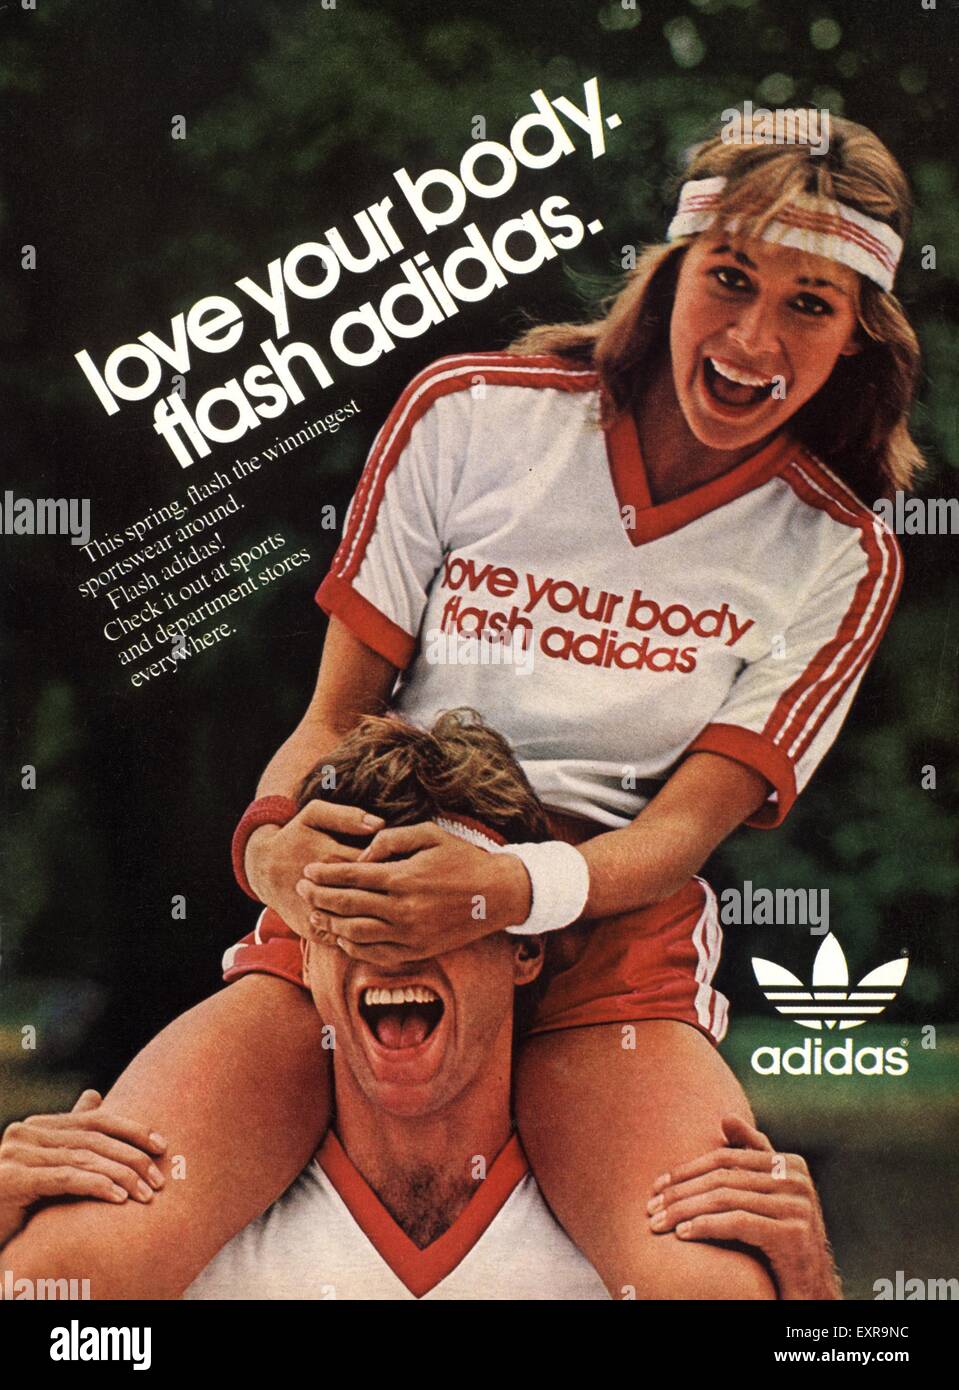 1980 USA Magazine Adidas Annonce Photo Stock - Alamy